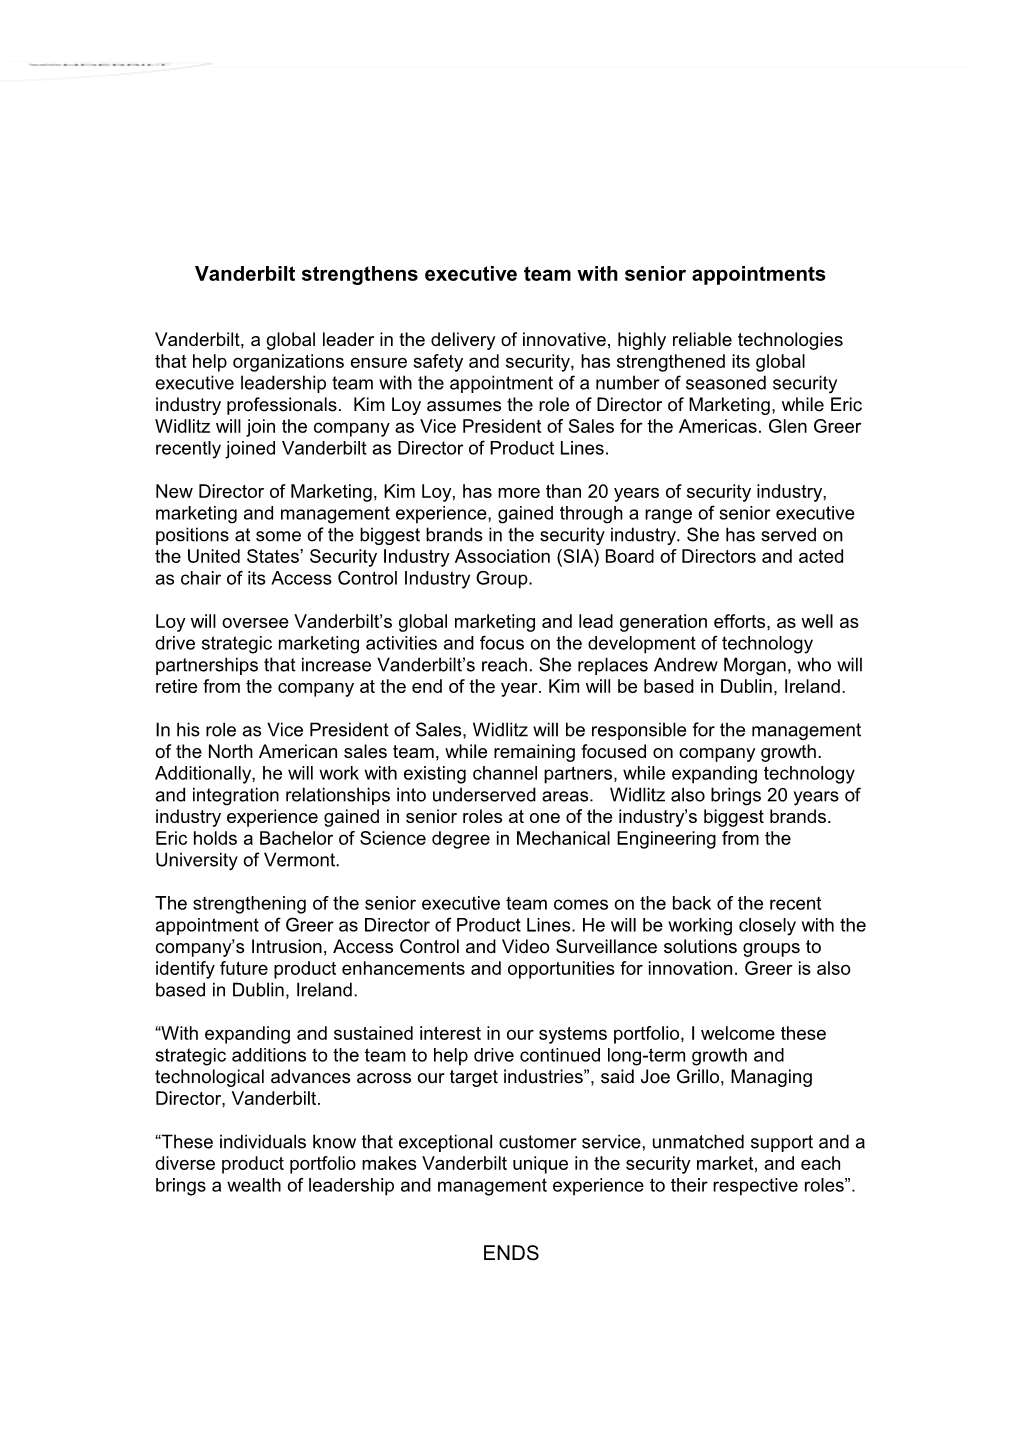 Vanderbilt Strengthens Executive Team with Senior Appointments